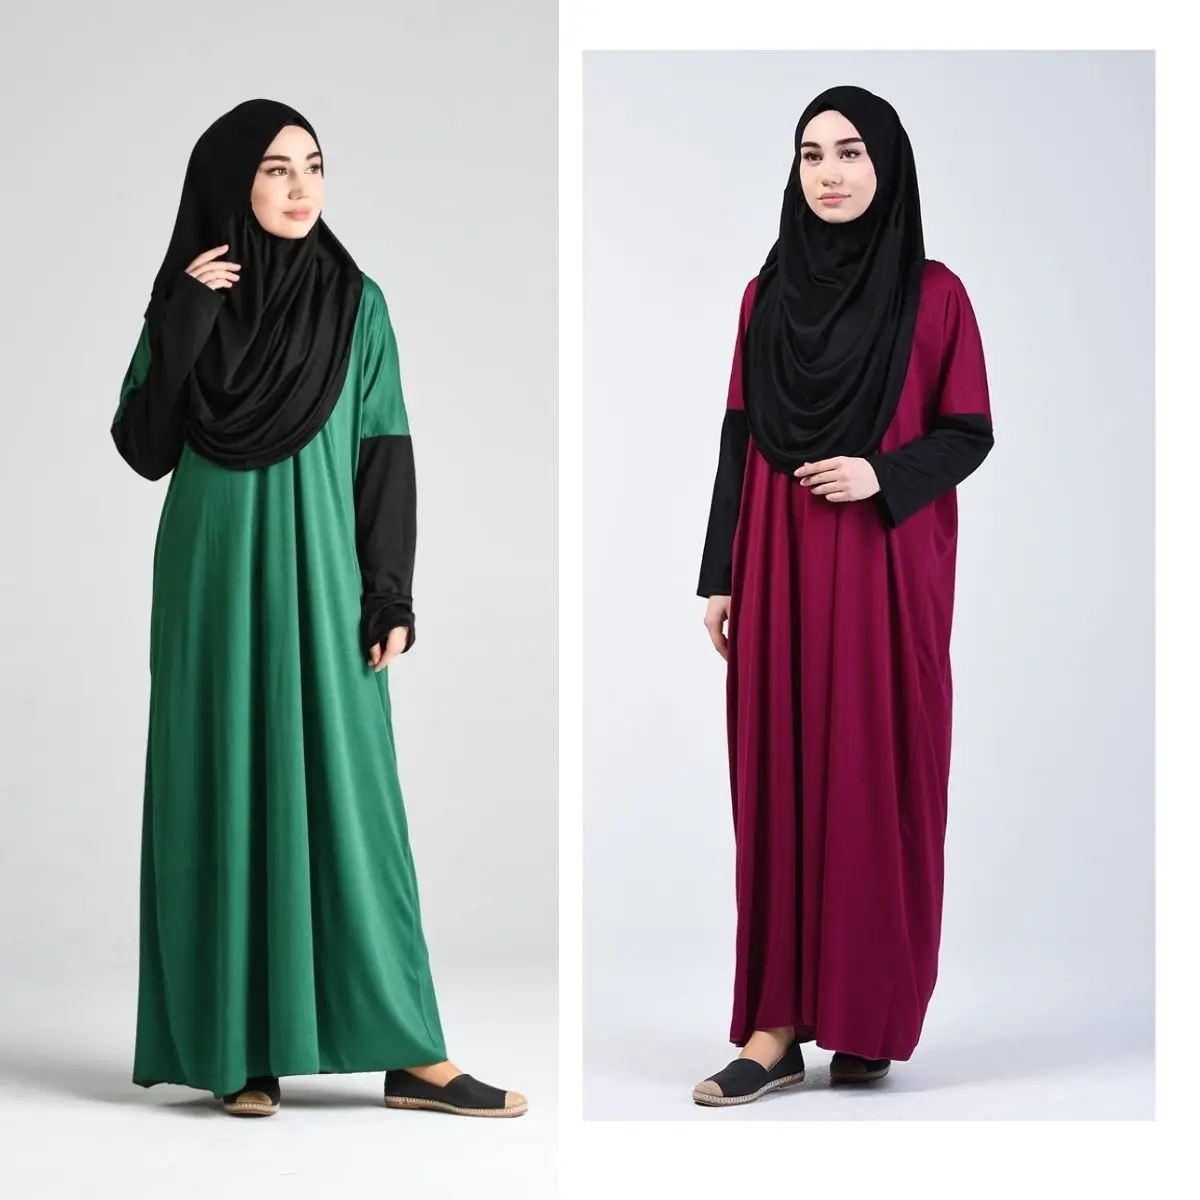 

Hooded Prayer Dress Plain Unlined Bat Sleeve Winter Comfortable Useful Loose Women Muslim Fashion Hijab Clothing Daily Custom